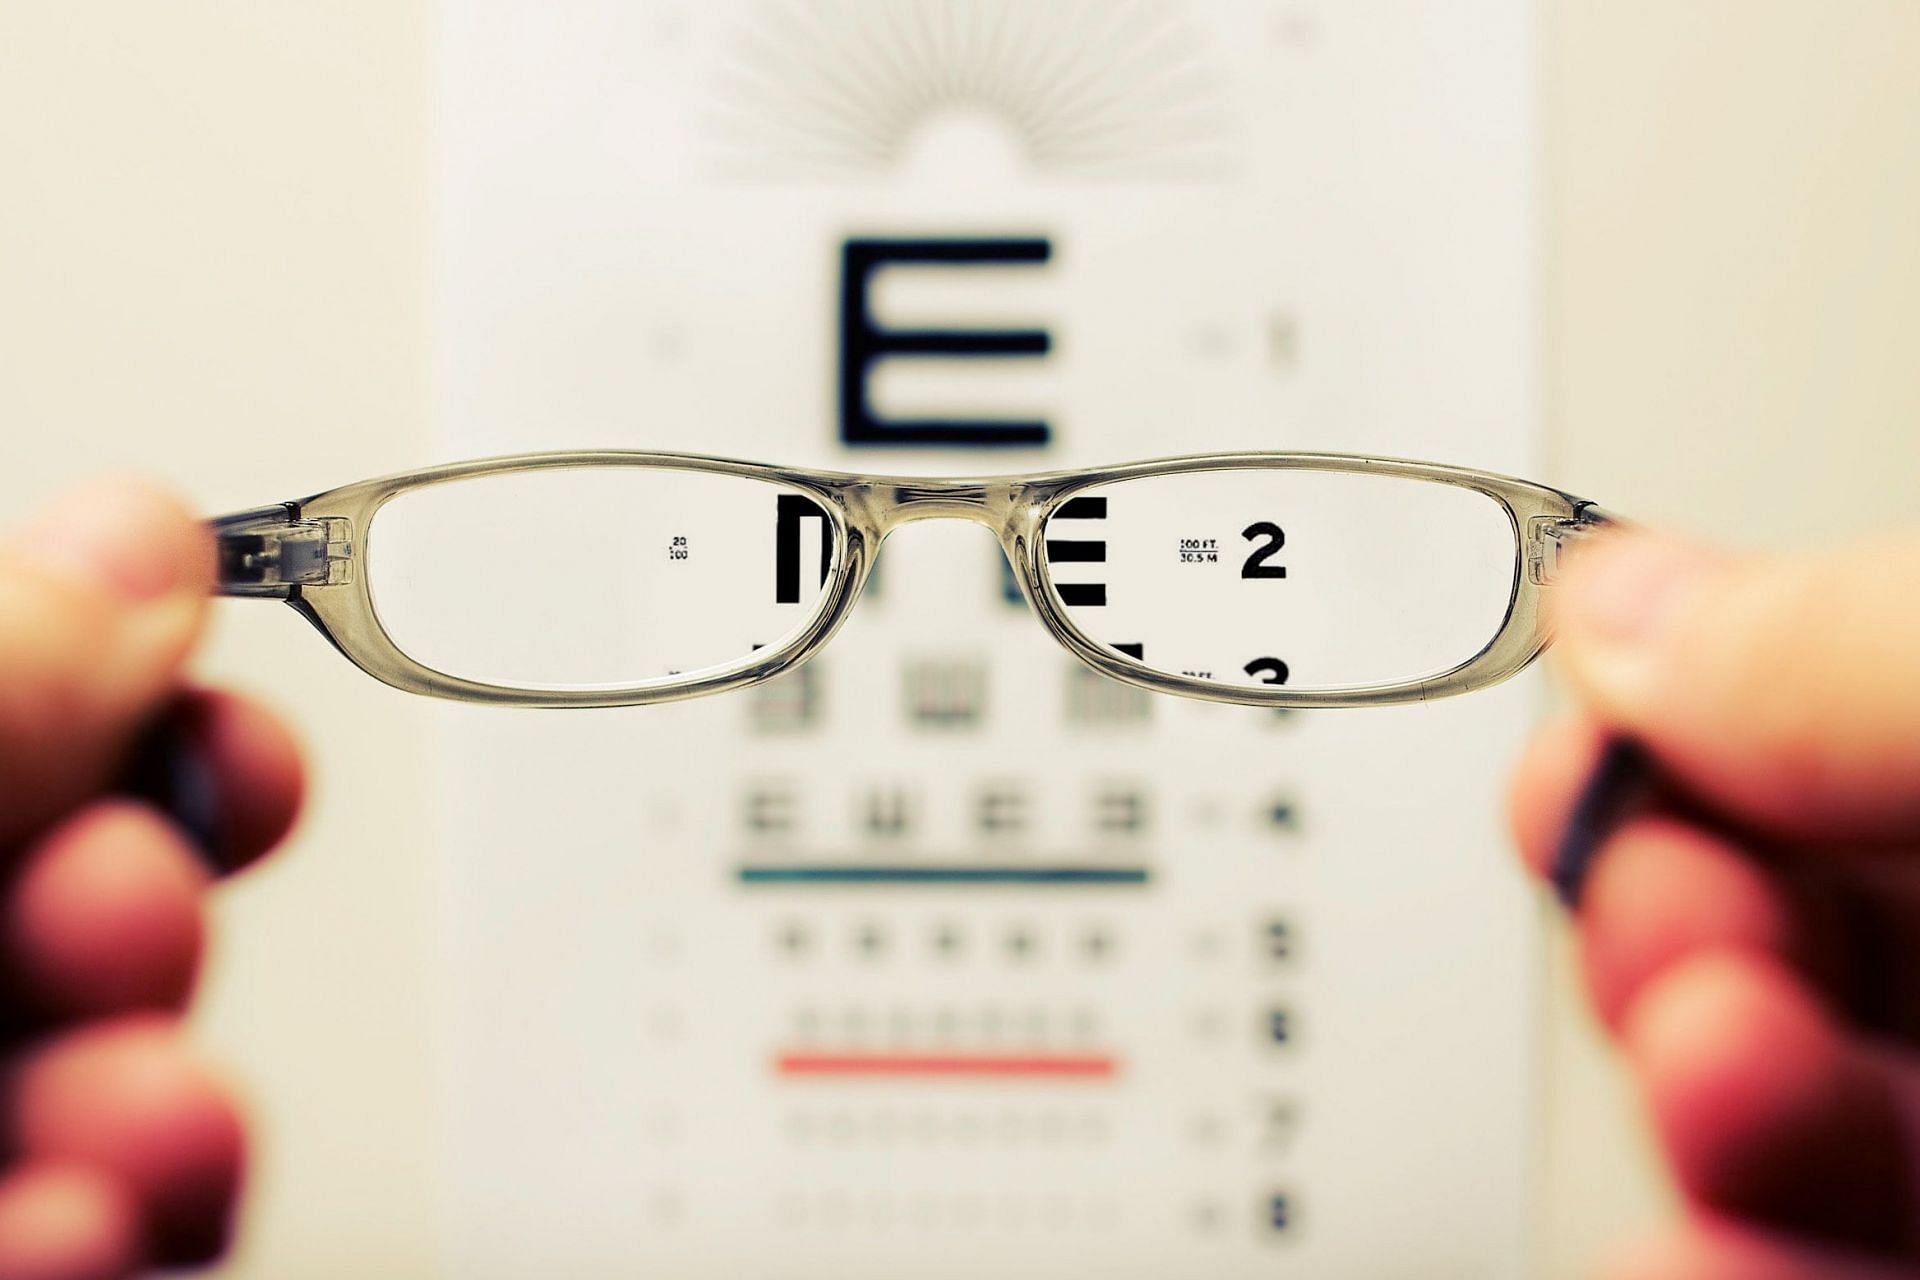 Older Americans might suffer vision impairment due to increased temperature. (Image via Unsplash/ David Travis)